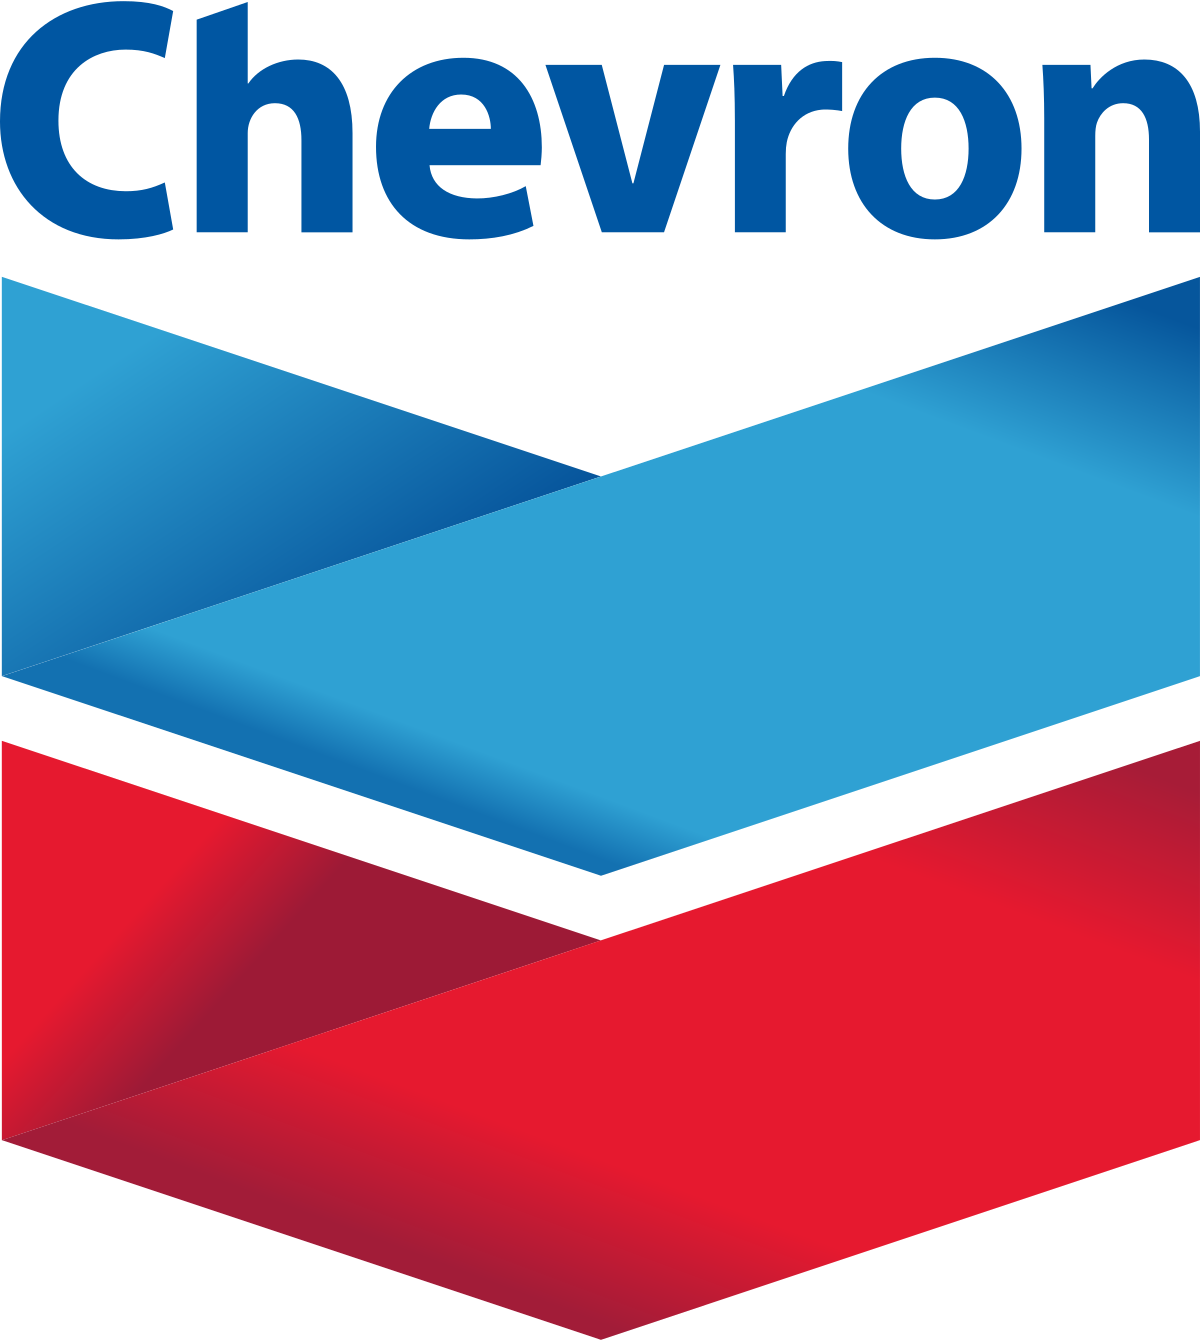 Chevron cuts 2020 spending plans again, says profits jump on asset sales